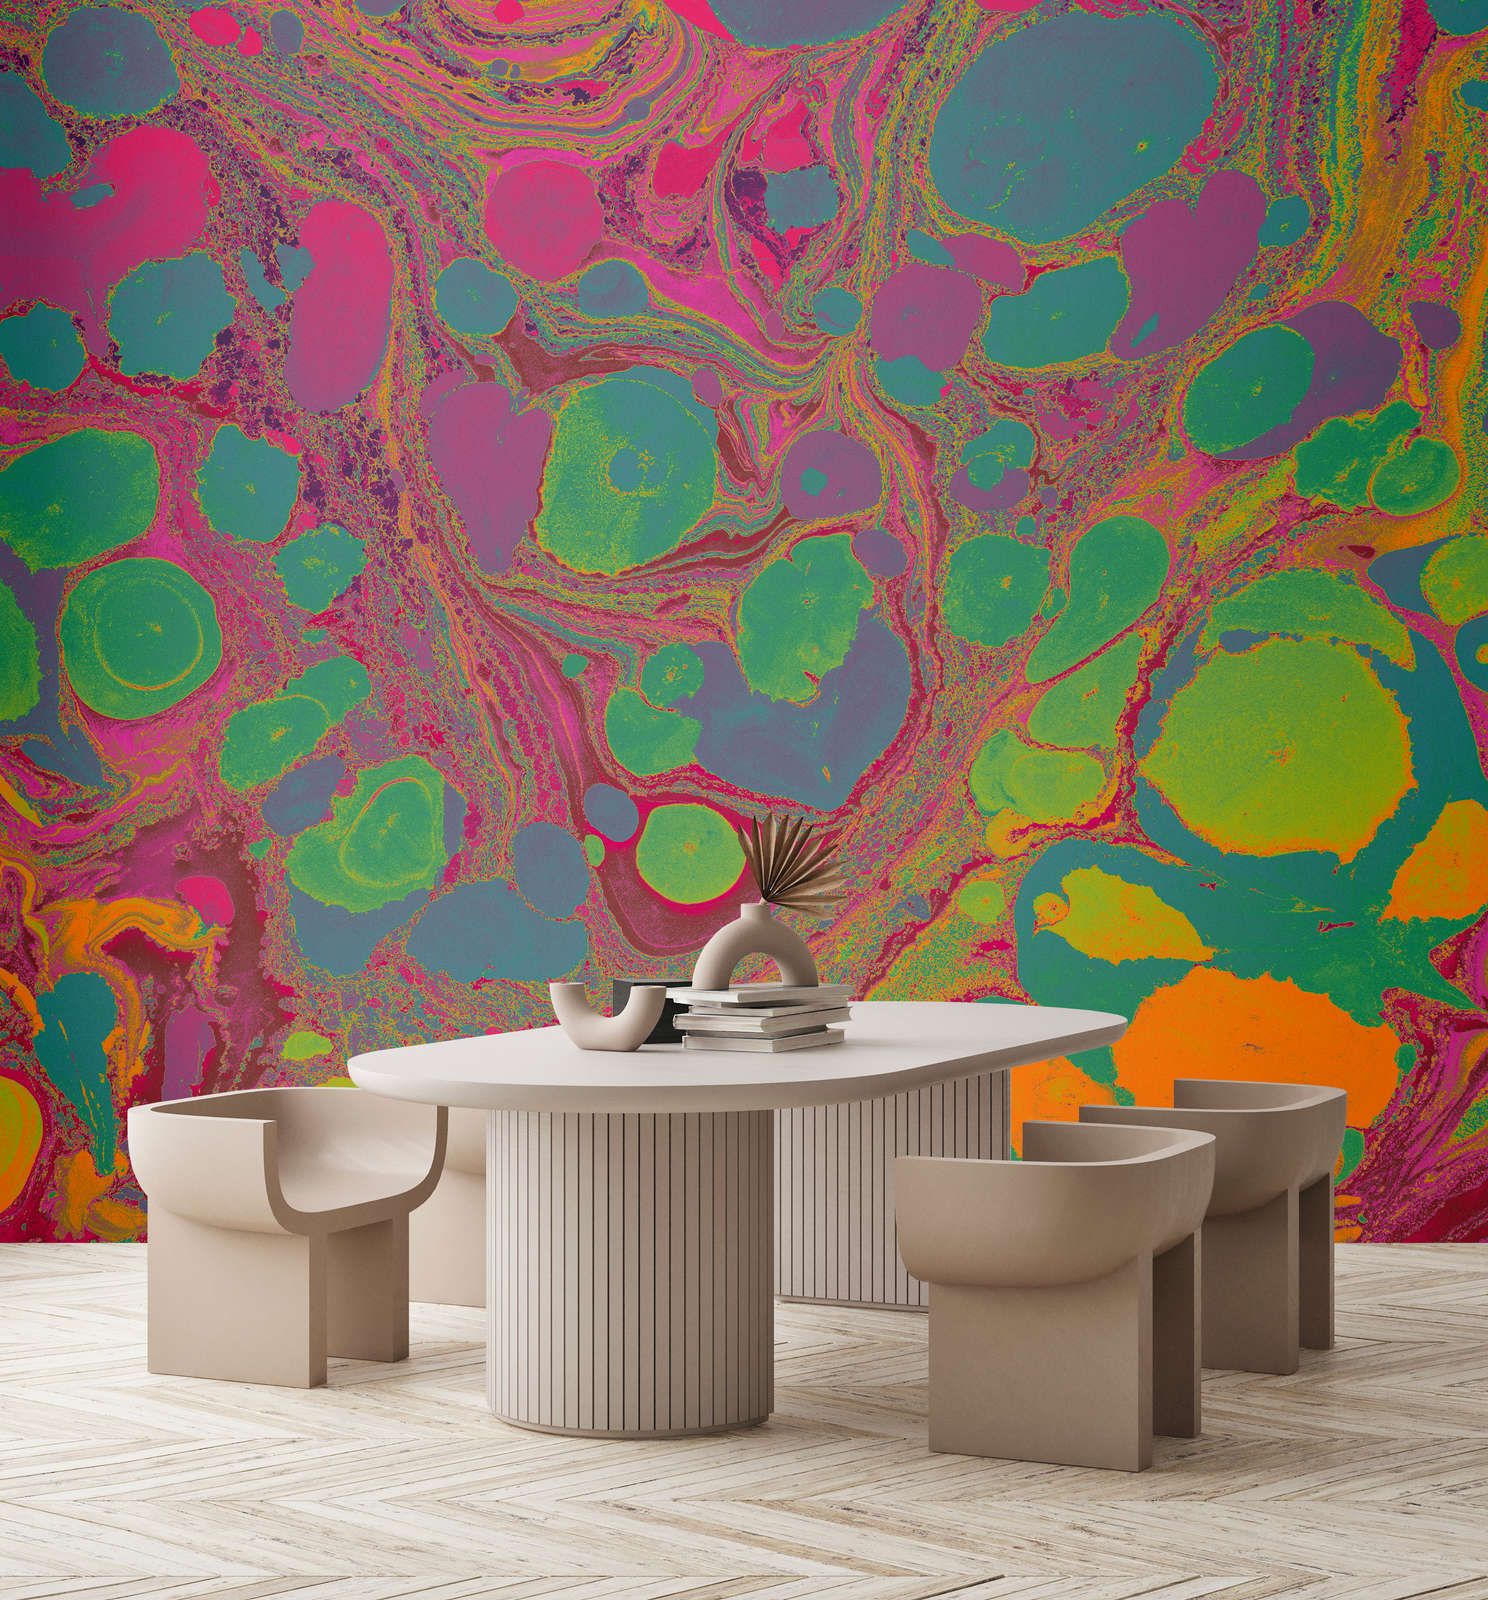             Photo wallpaper »flow« - Colour splash in bright colours - green, pink, orange | Smooth, slightly shiny premium non-woven fabric
        